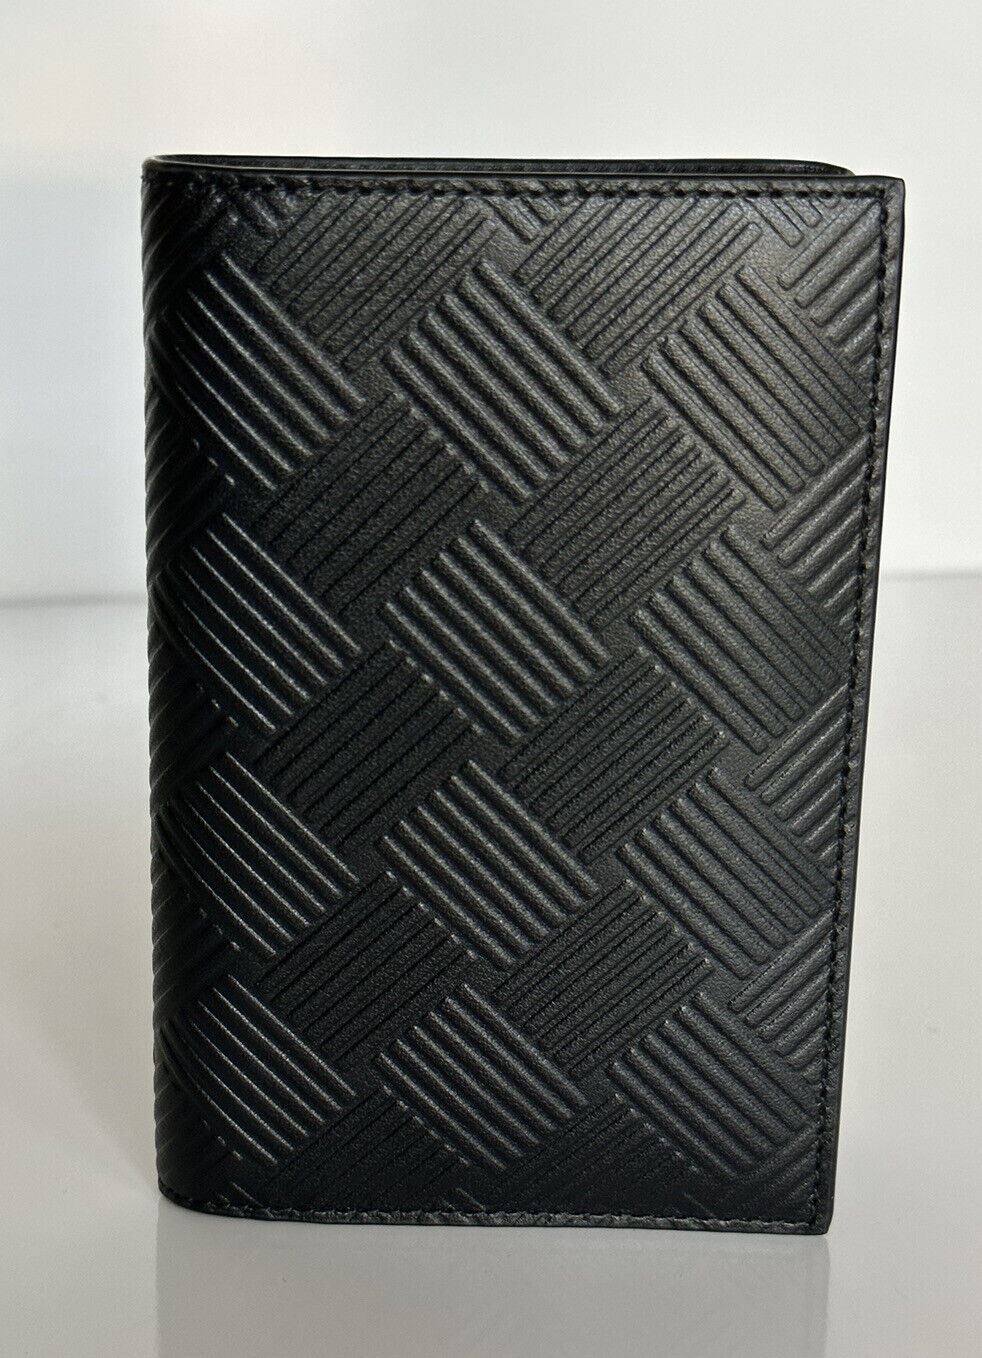 NWT $380 Bottega Veneta Debossed Leather Passport Holder Black/Silver 667061 IT